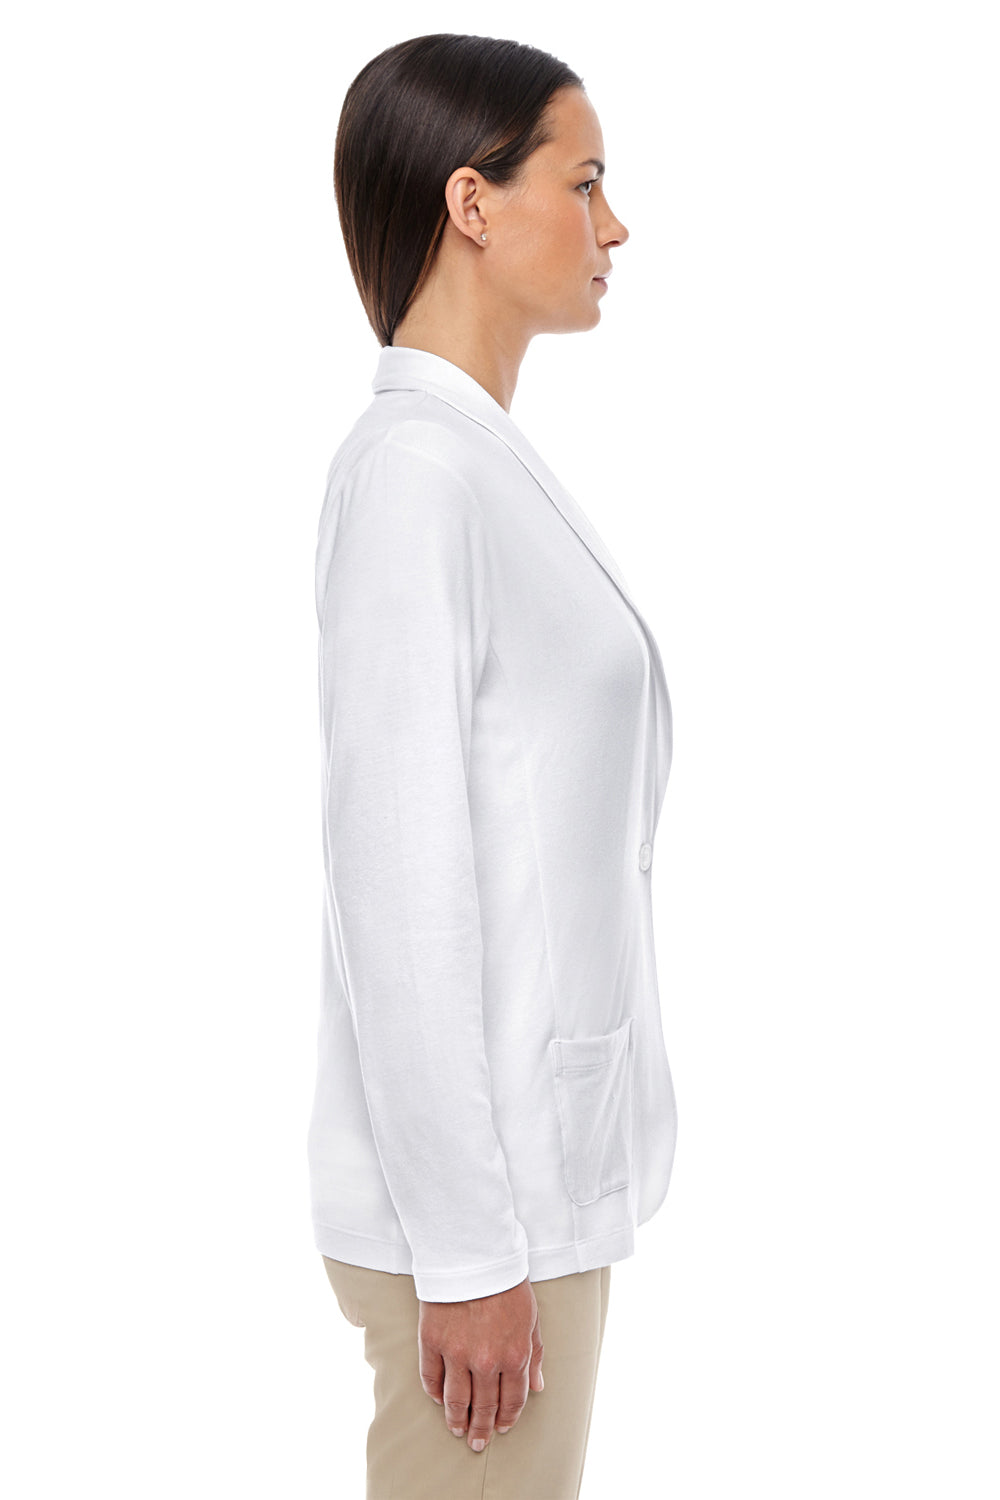 Devon & Jones DP462W Womens Perfect Fit Cardigan Sweater White Side